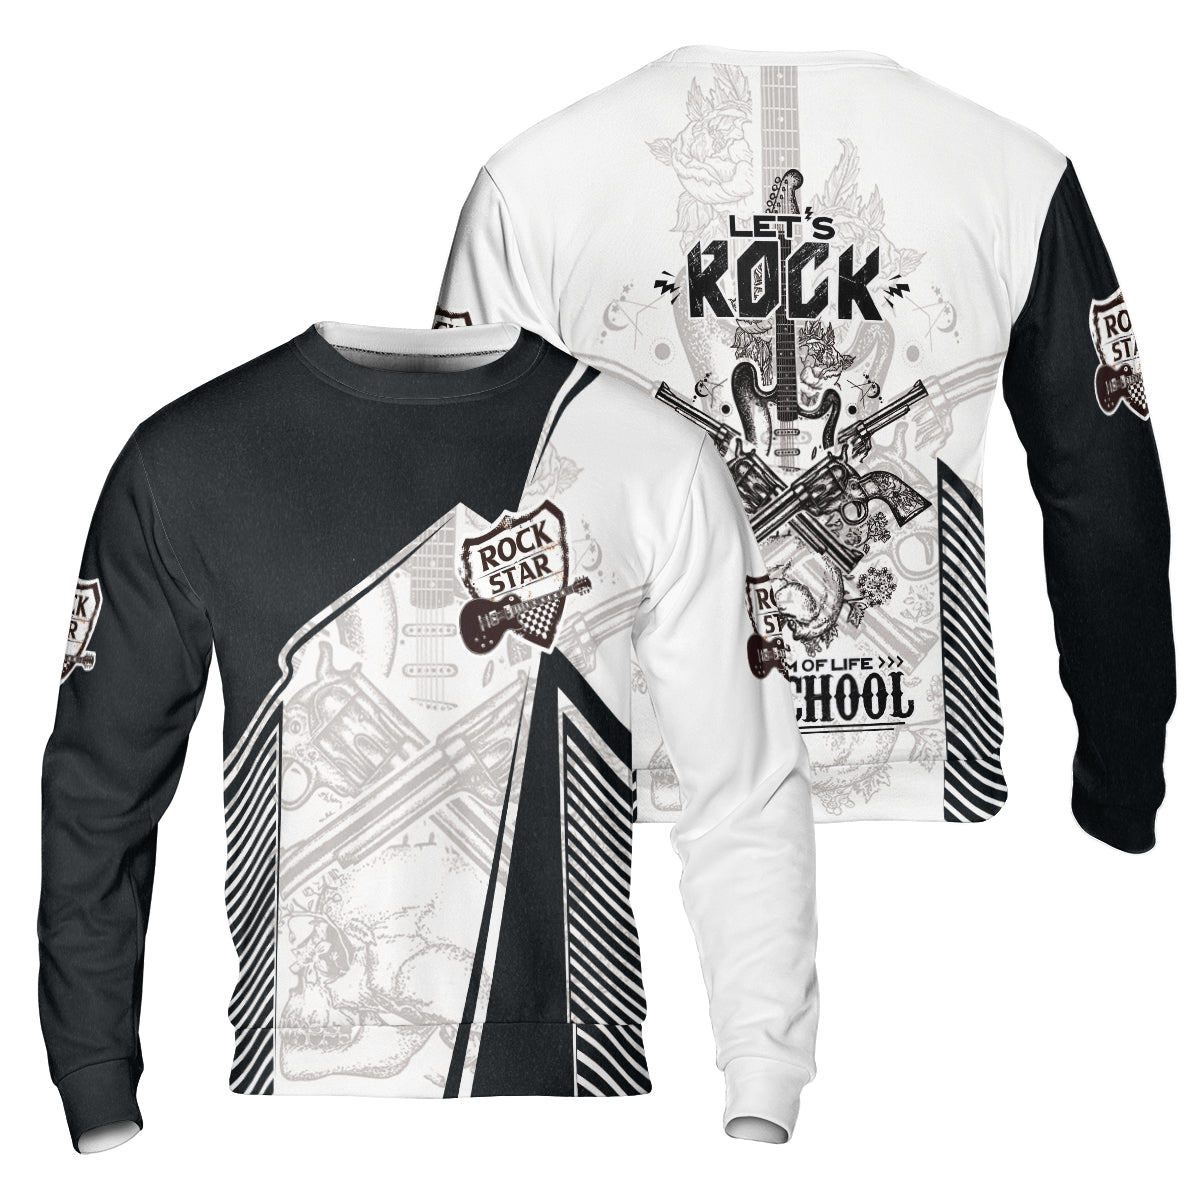 Black And White Guitar Sweatshirt, Let's Rock Freedom Of Life Old School Guitar Sweatshirt